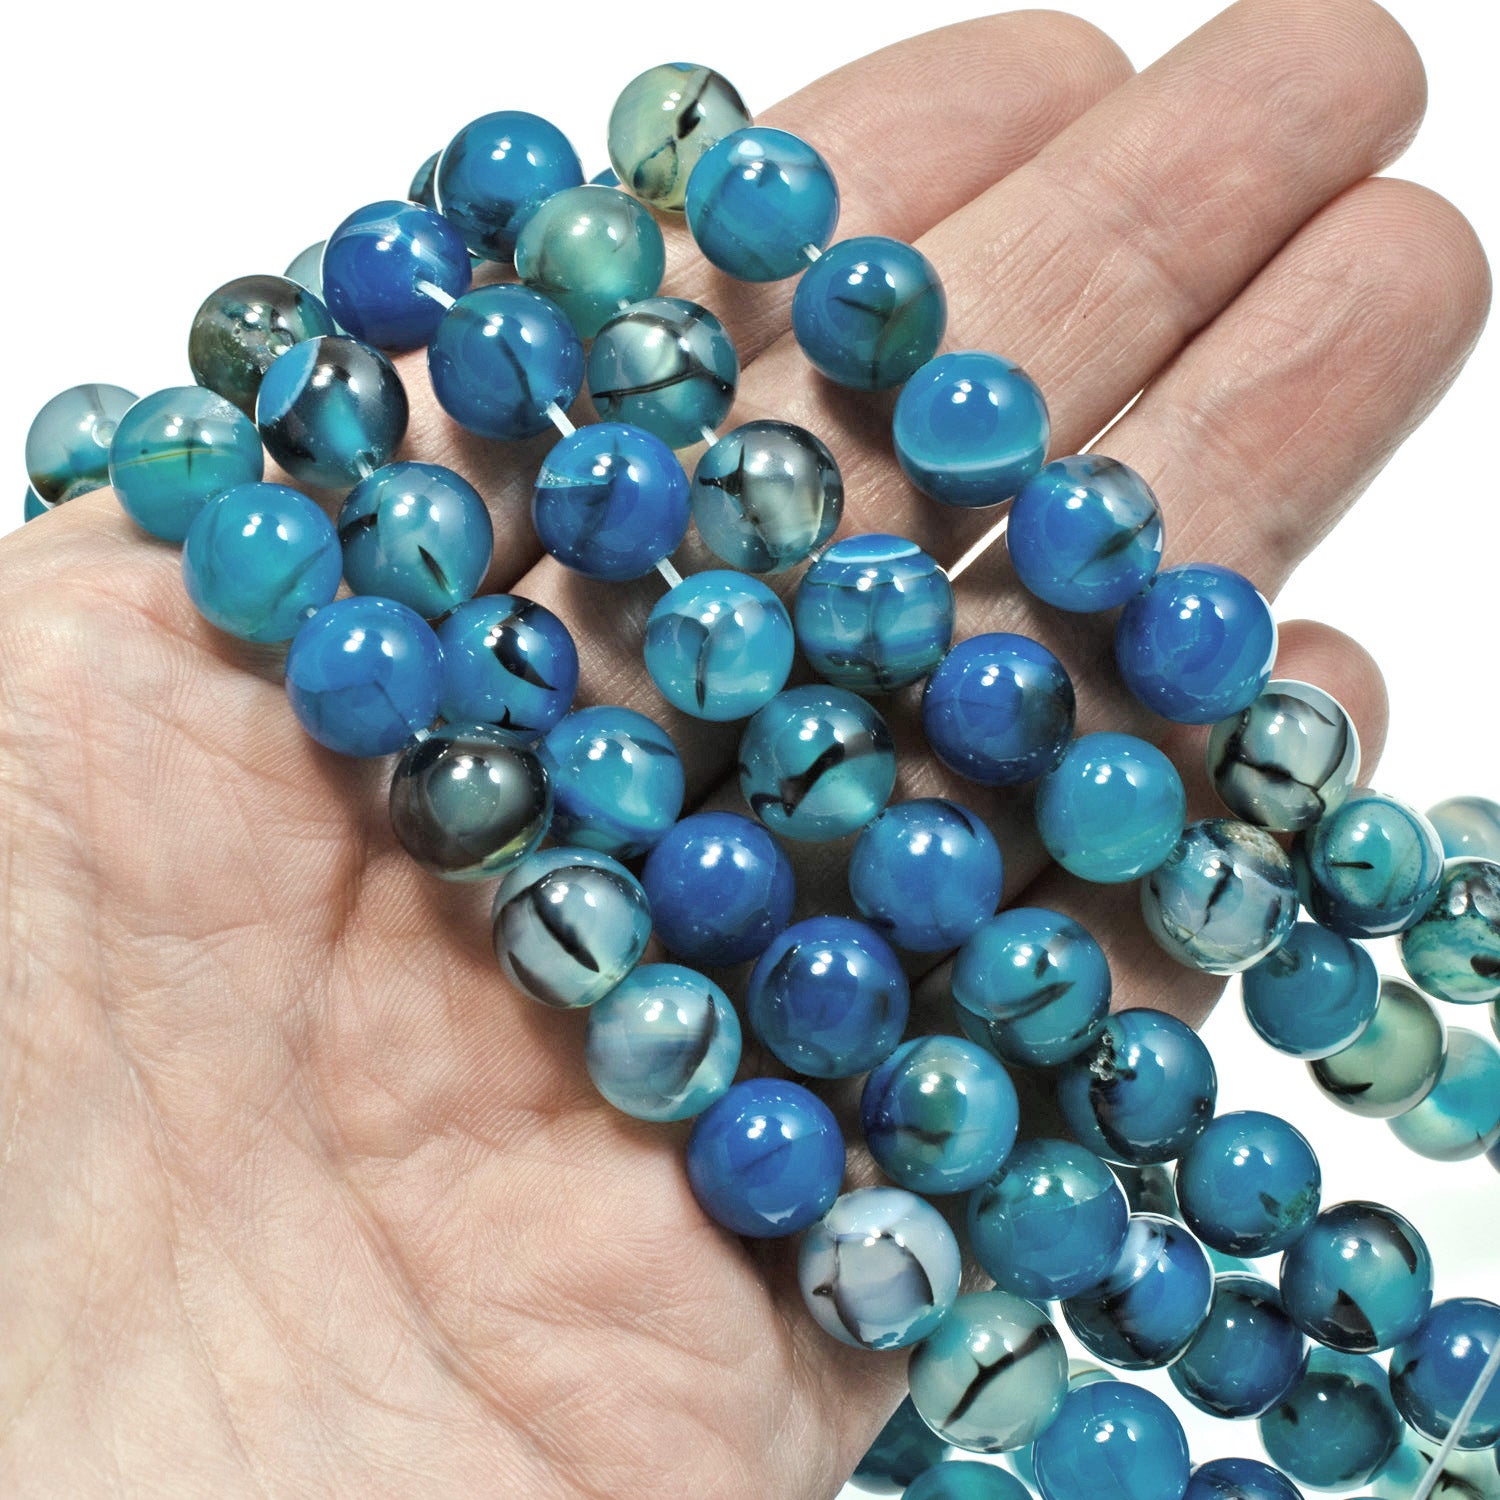 10mm Dragon Vein Agate Beads in Oceanic Aqua Blue | Hackberry Creek